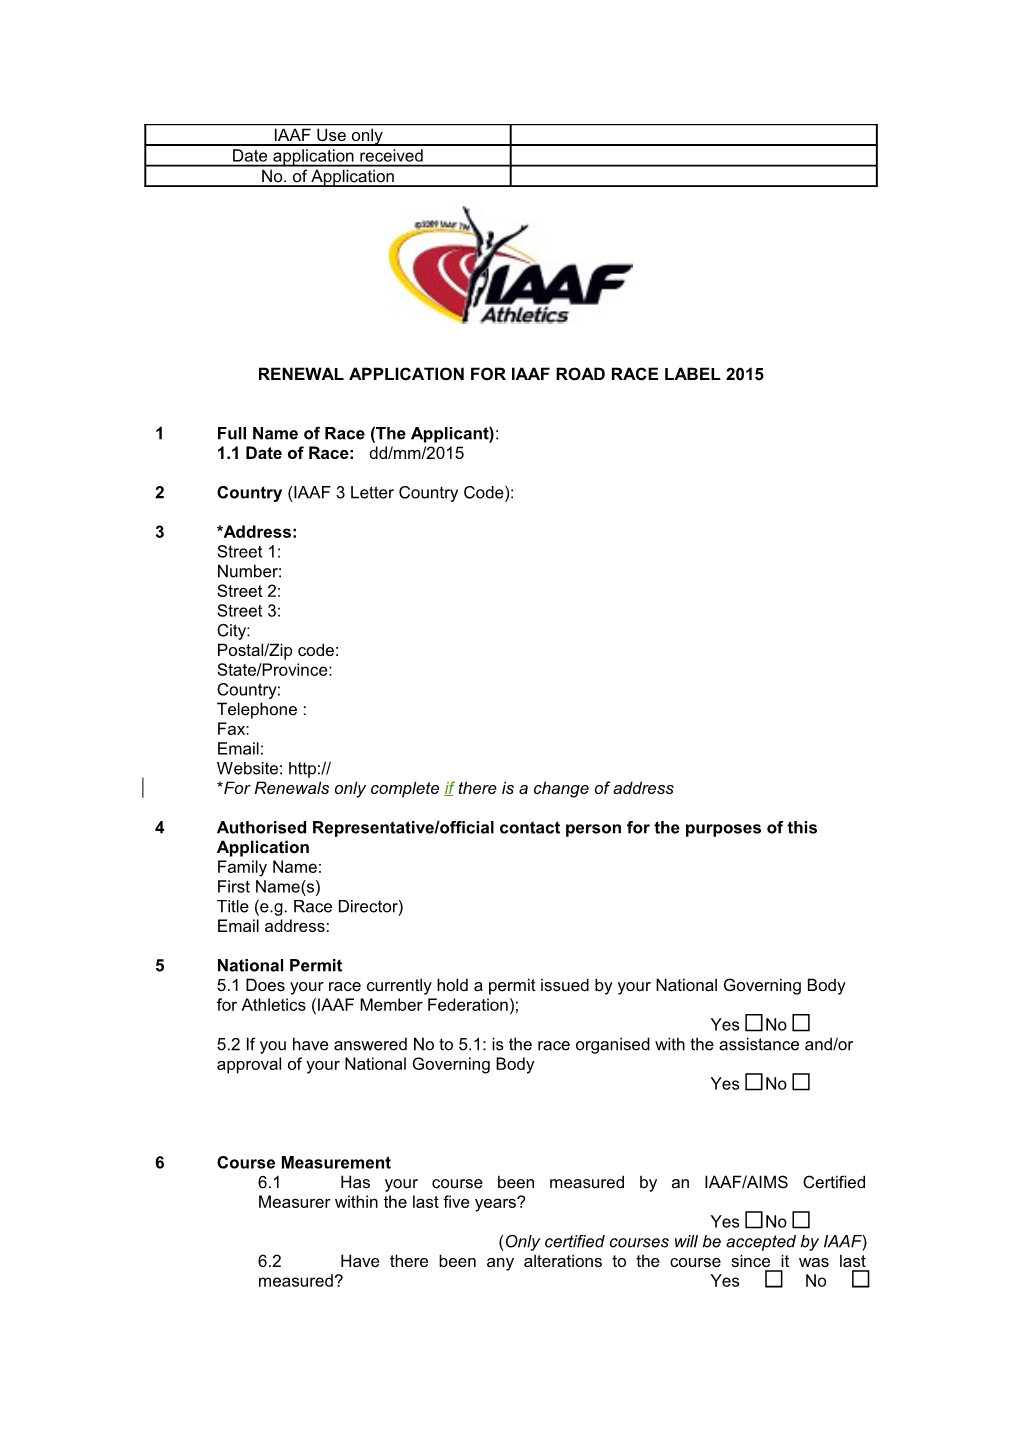 IAAF Use Only